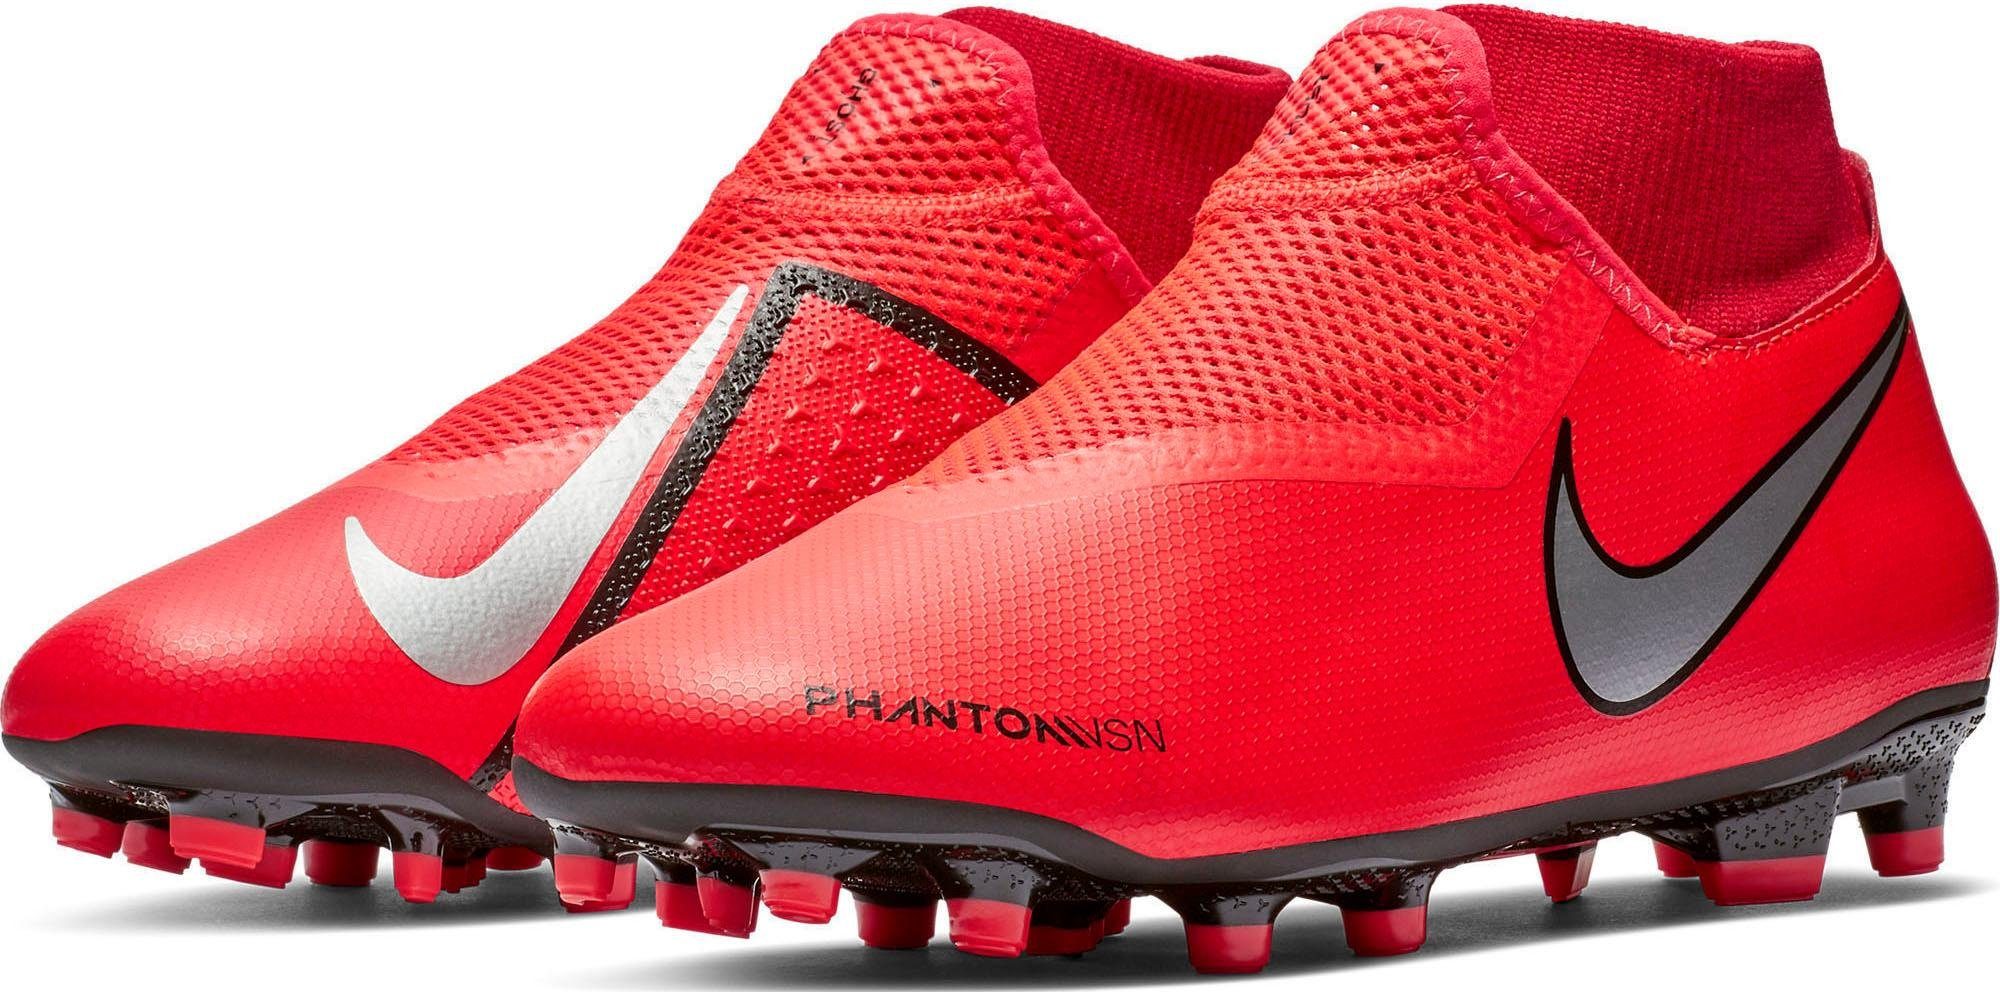 Nike Phantom Vision Elite DF Men's FG Football Boots Sports Direct